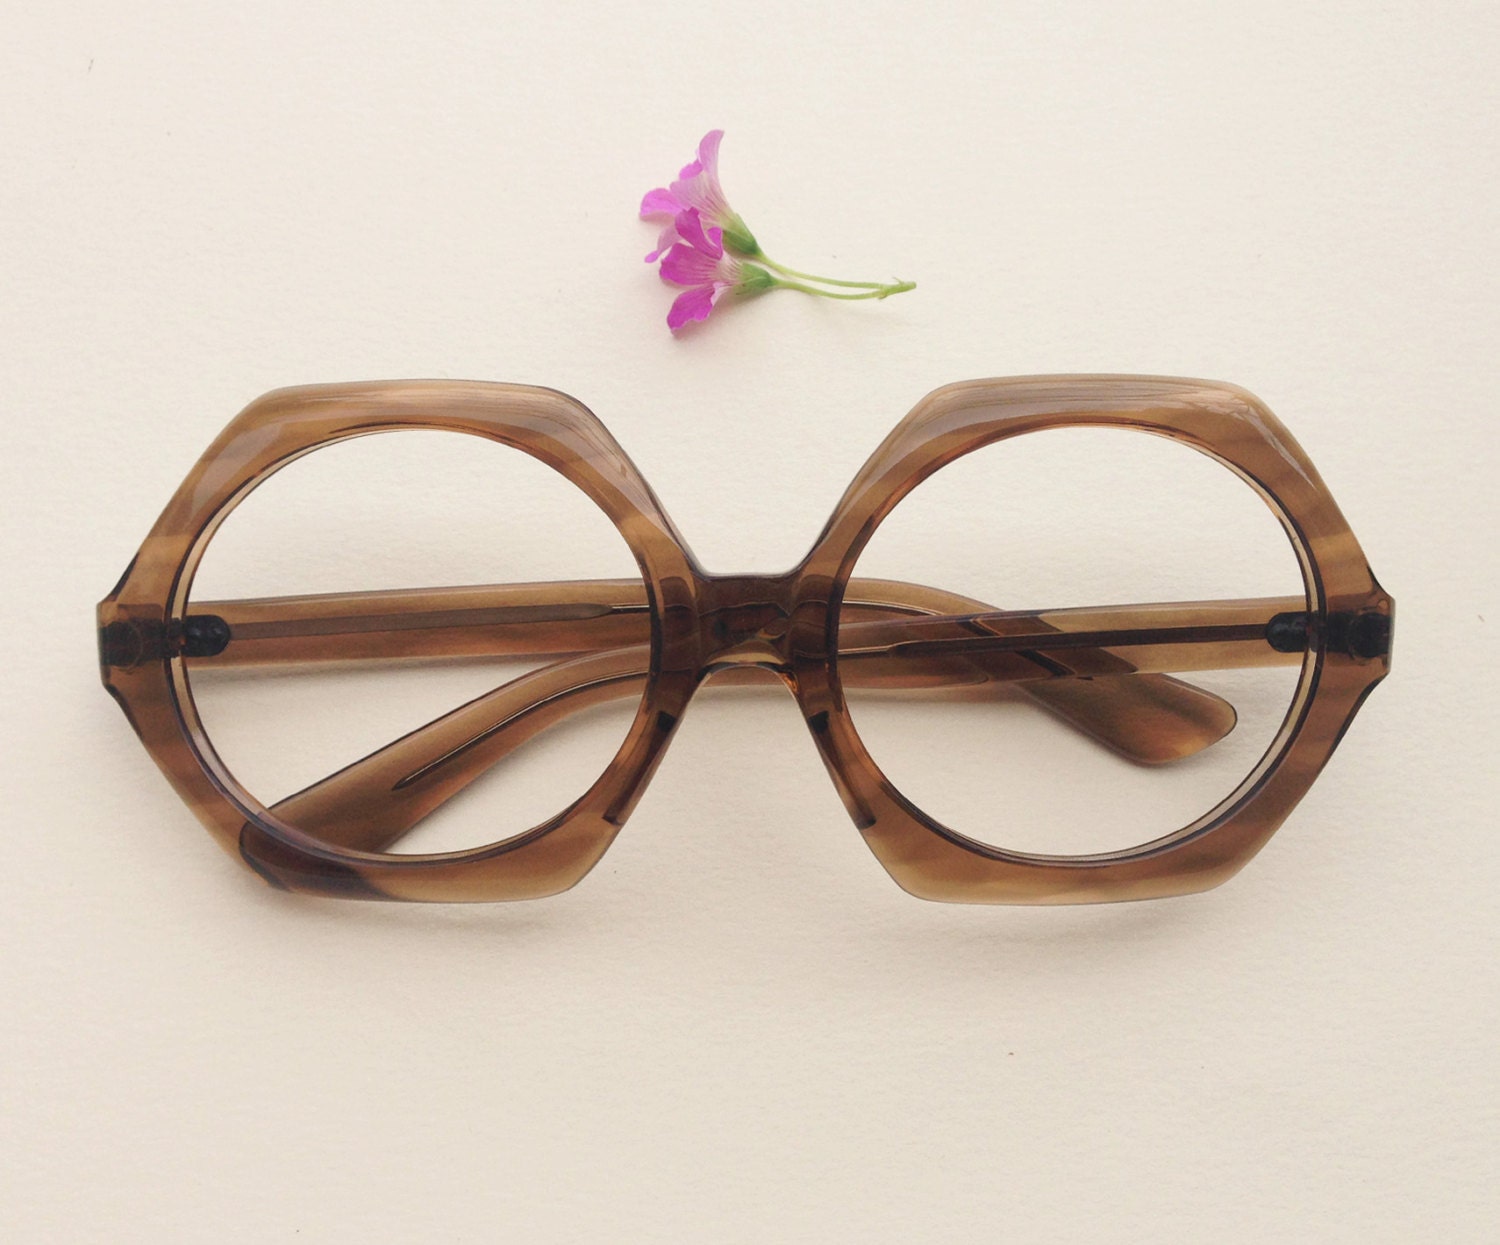 60s Oversize Eyeglasses Huge Bug Tortoise Brown Frames 1960s Mod Eyewear Glasses Deadstock